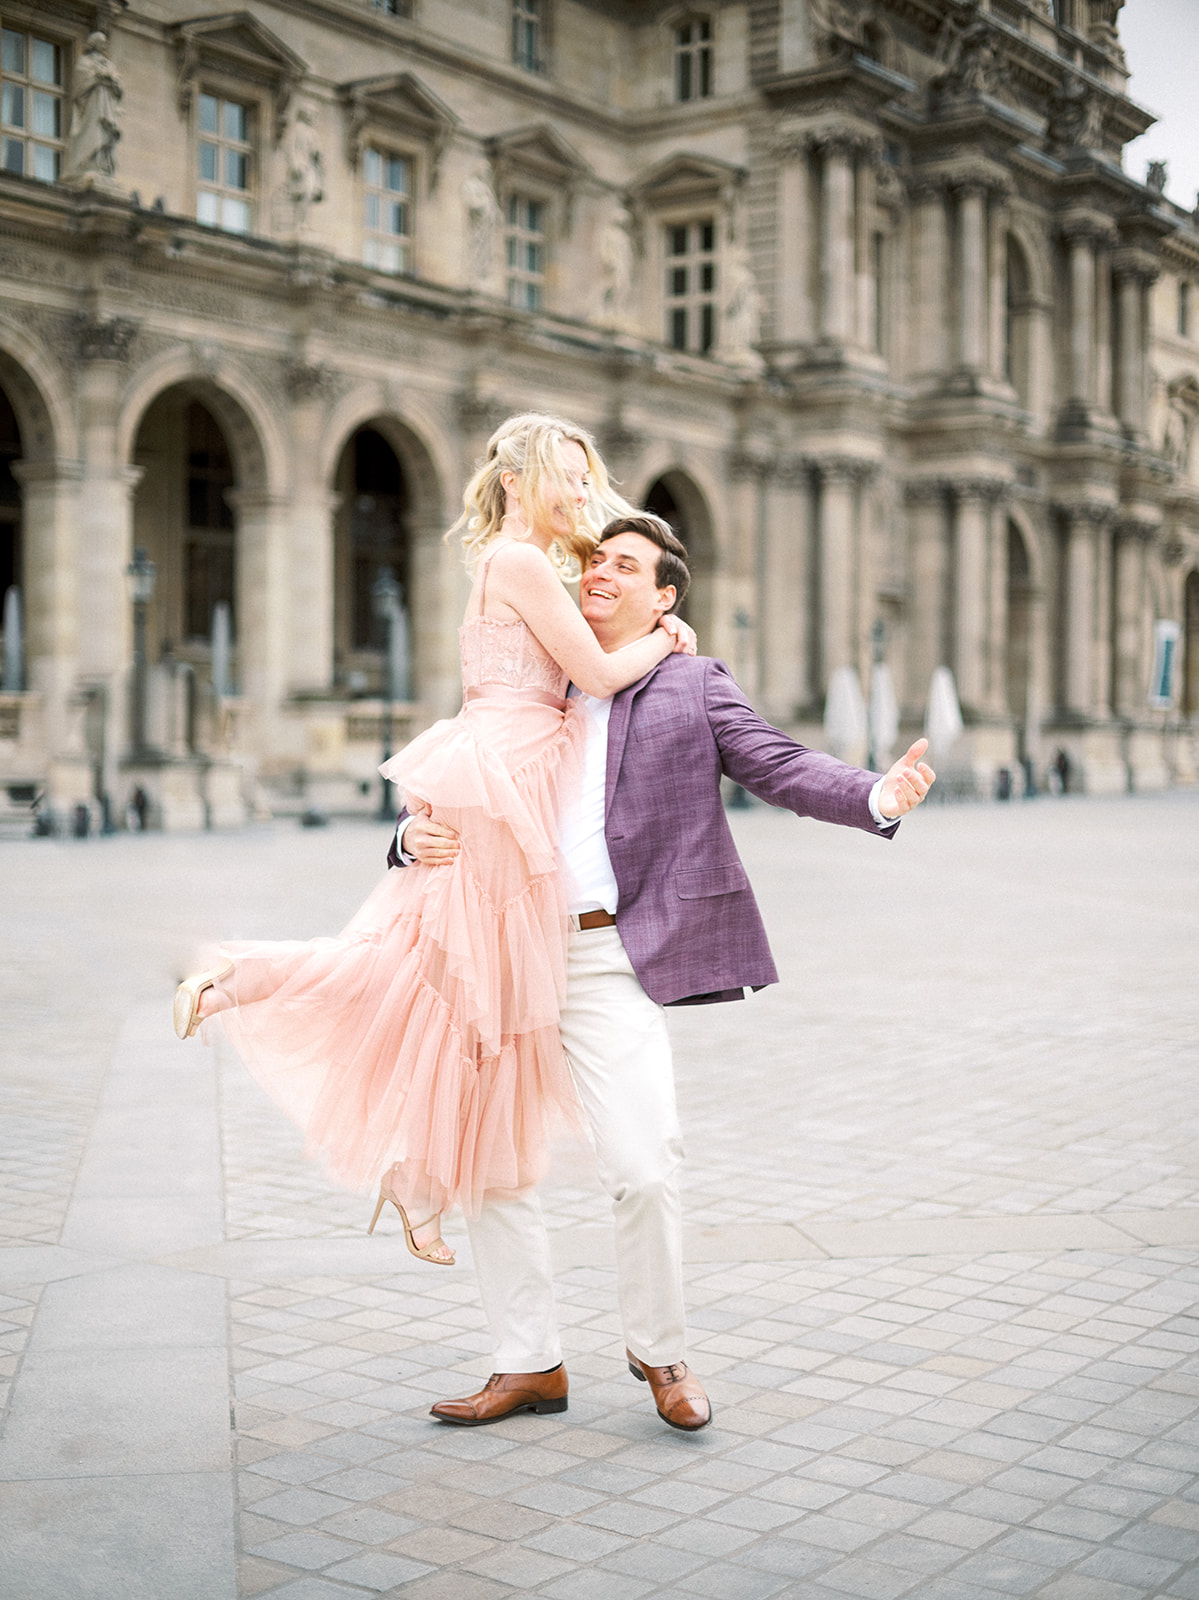 Man picks up woman at Louvre in Paris.